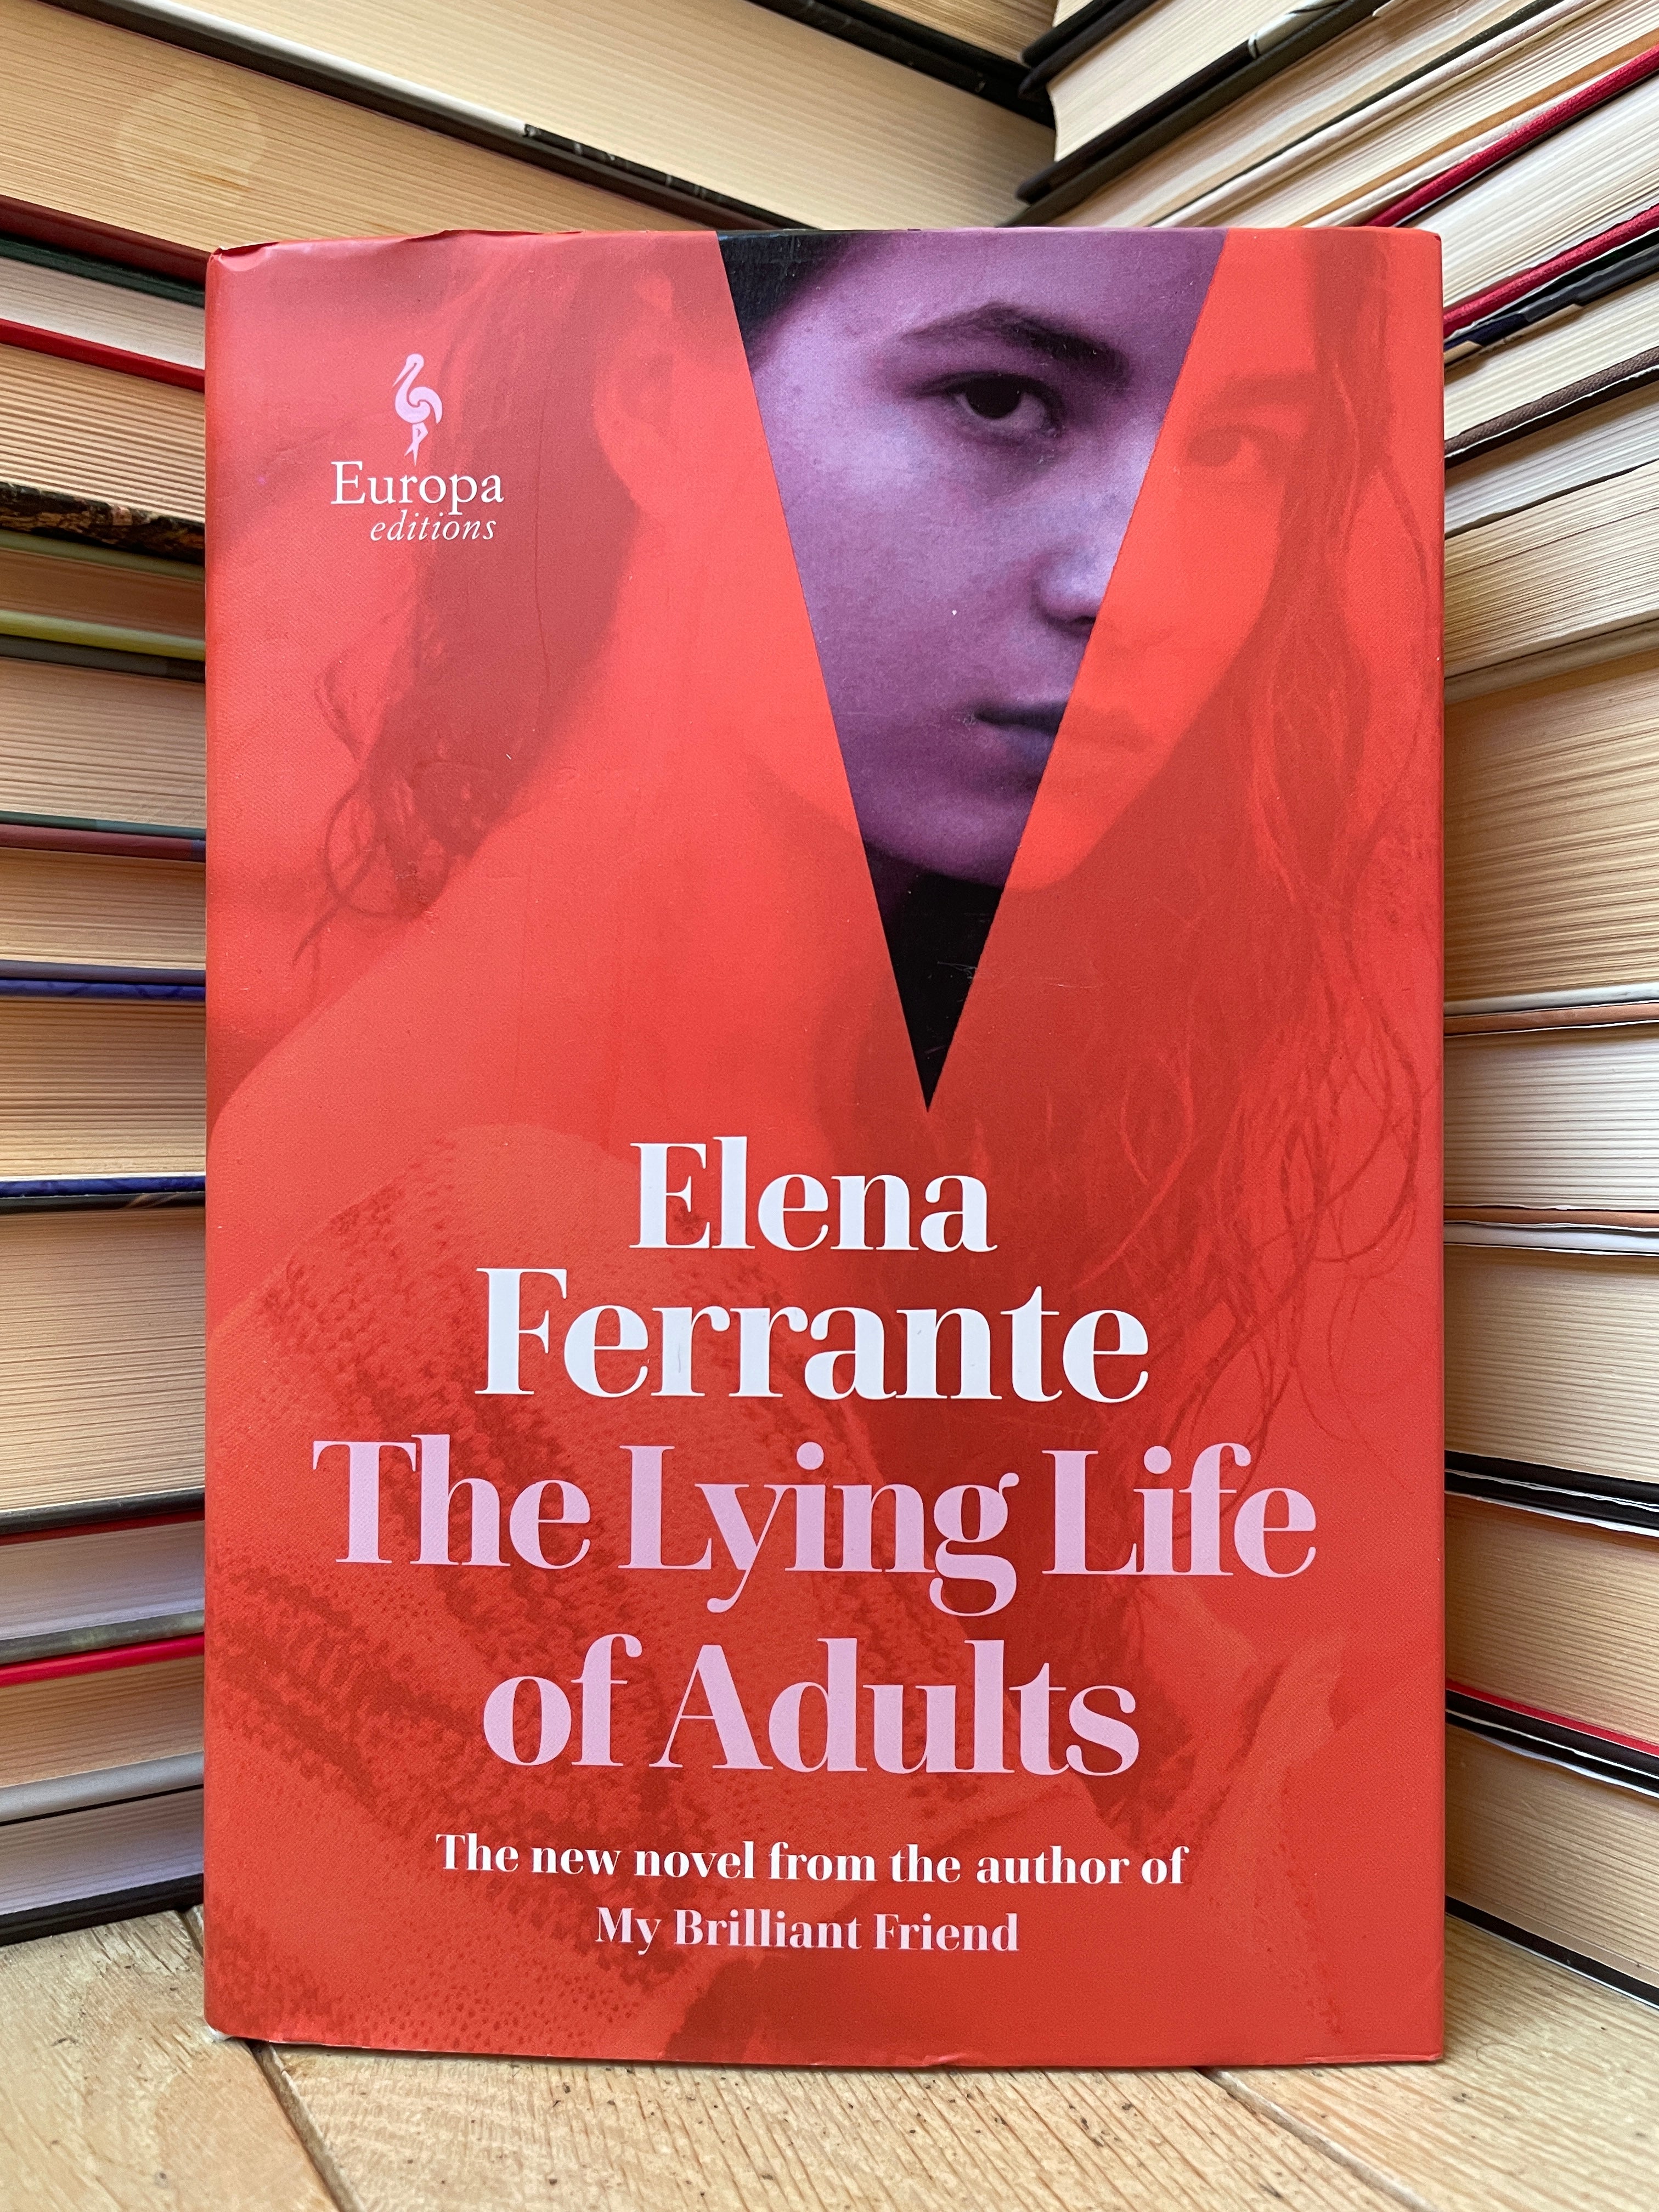 The　–　LIBRIS　Lying　of　Life　Adults　Elena　Ferrante